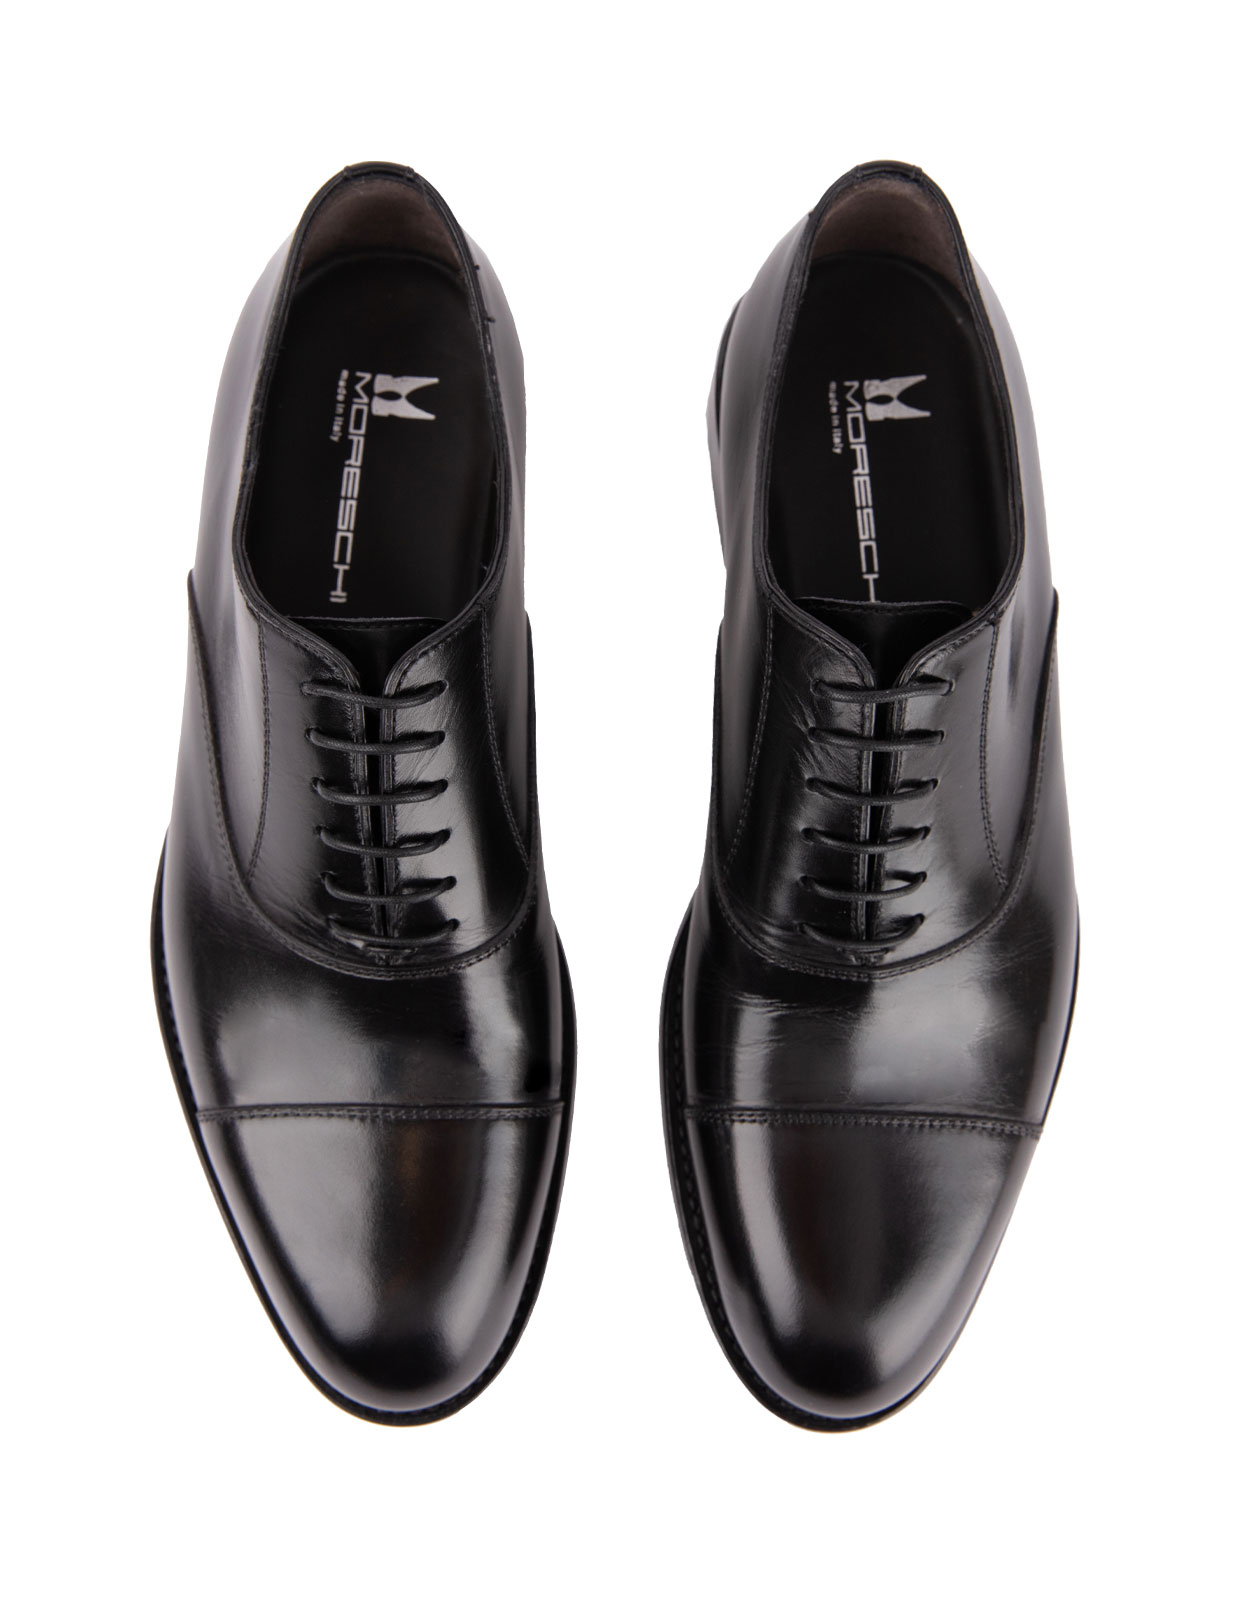 New York Oxford Shoes Calfskin Black Stl 9.5